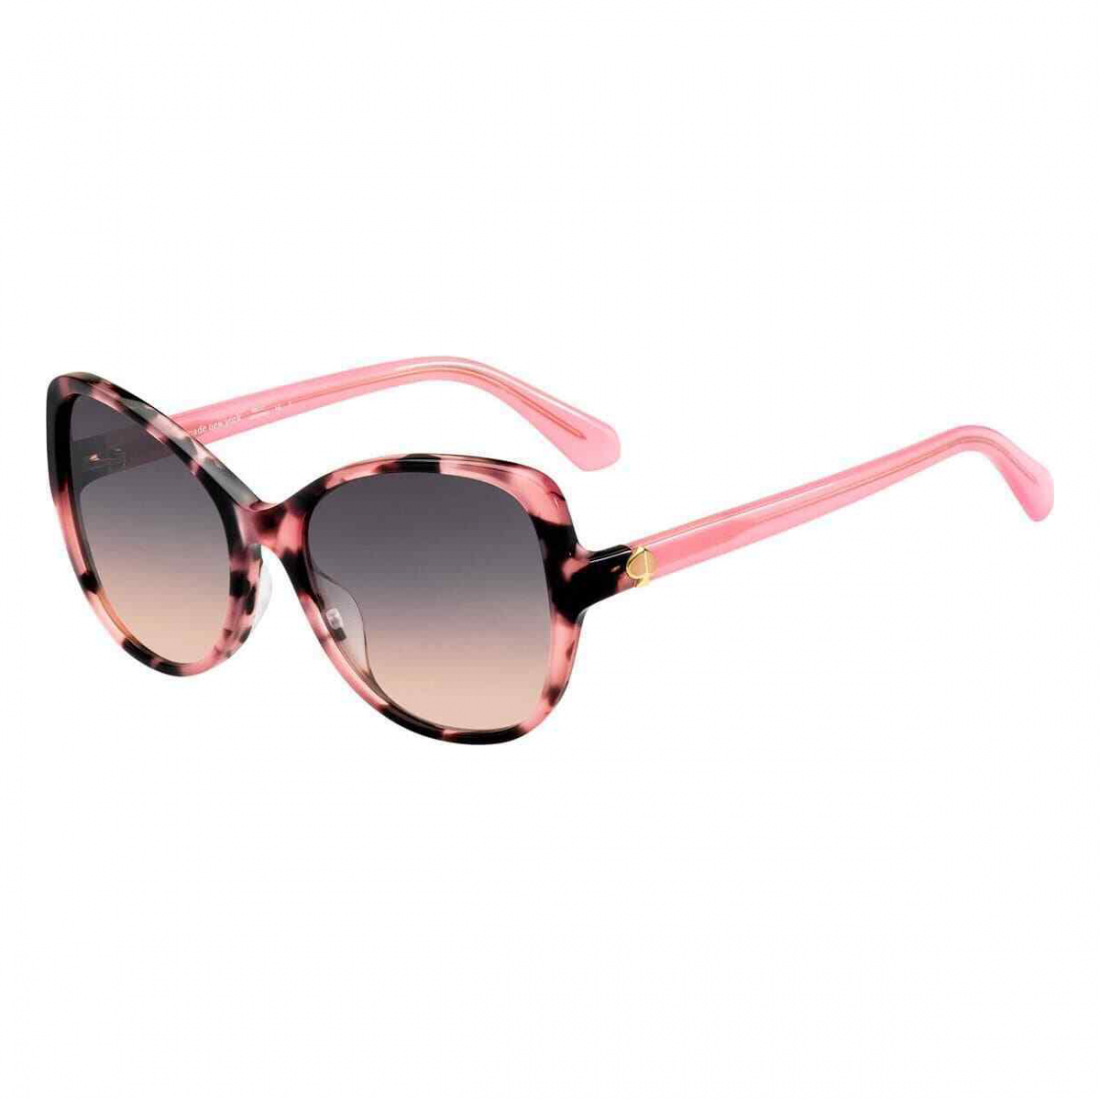 Women's 'ESMAE/G/S 0OO4' Sunglasses